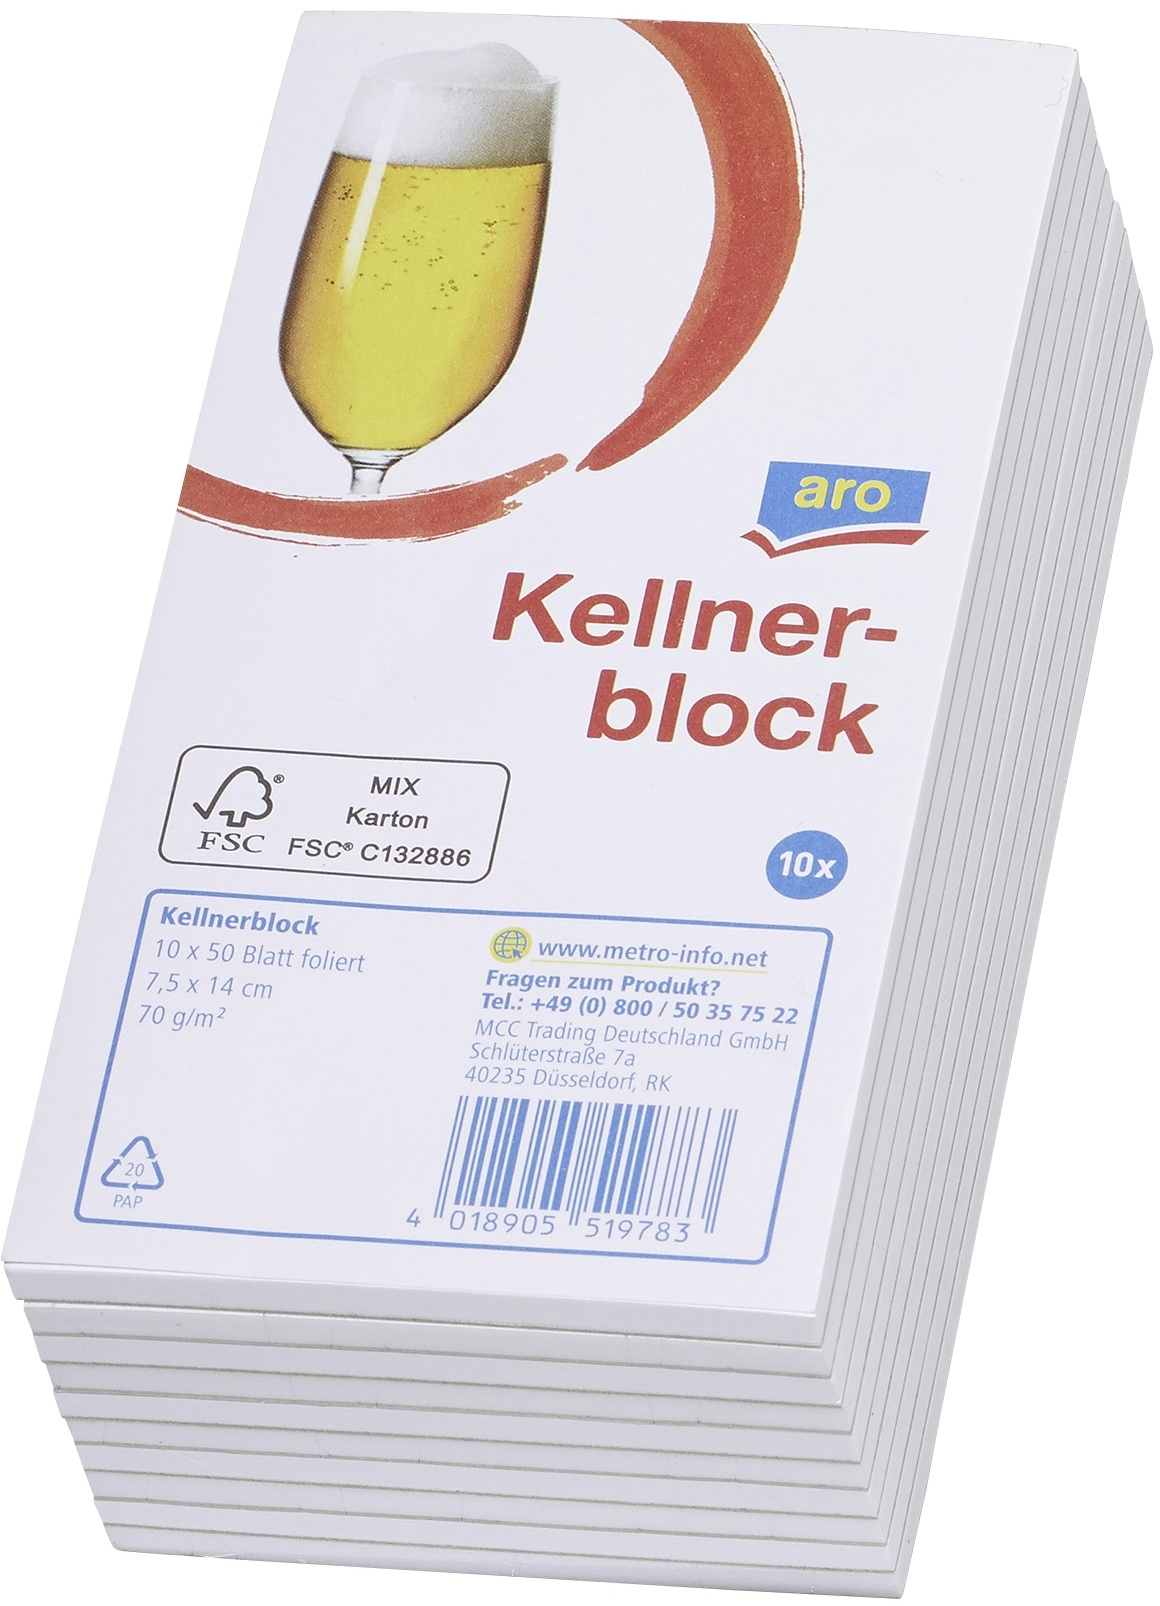 aro Kellnerblock, 7 x 14.8 cm, 70 g/m2, 50 Blatt, 10 Stück